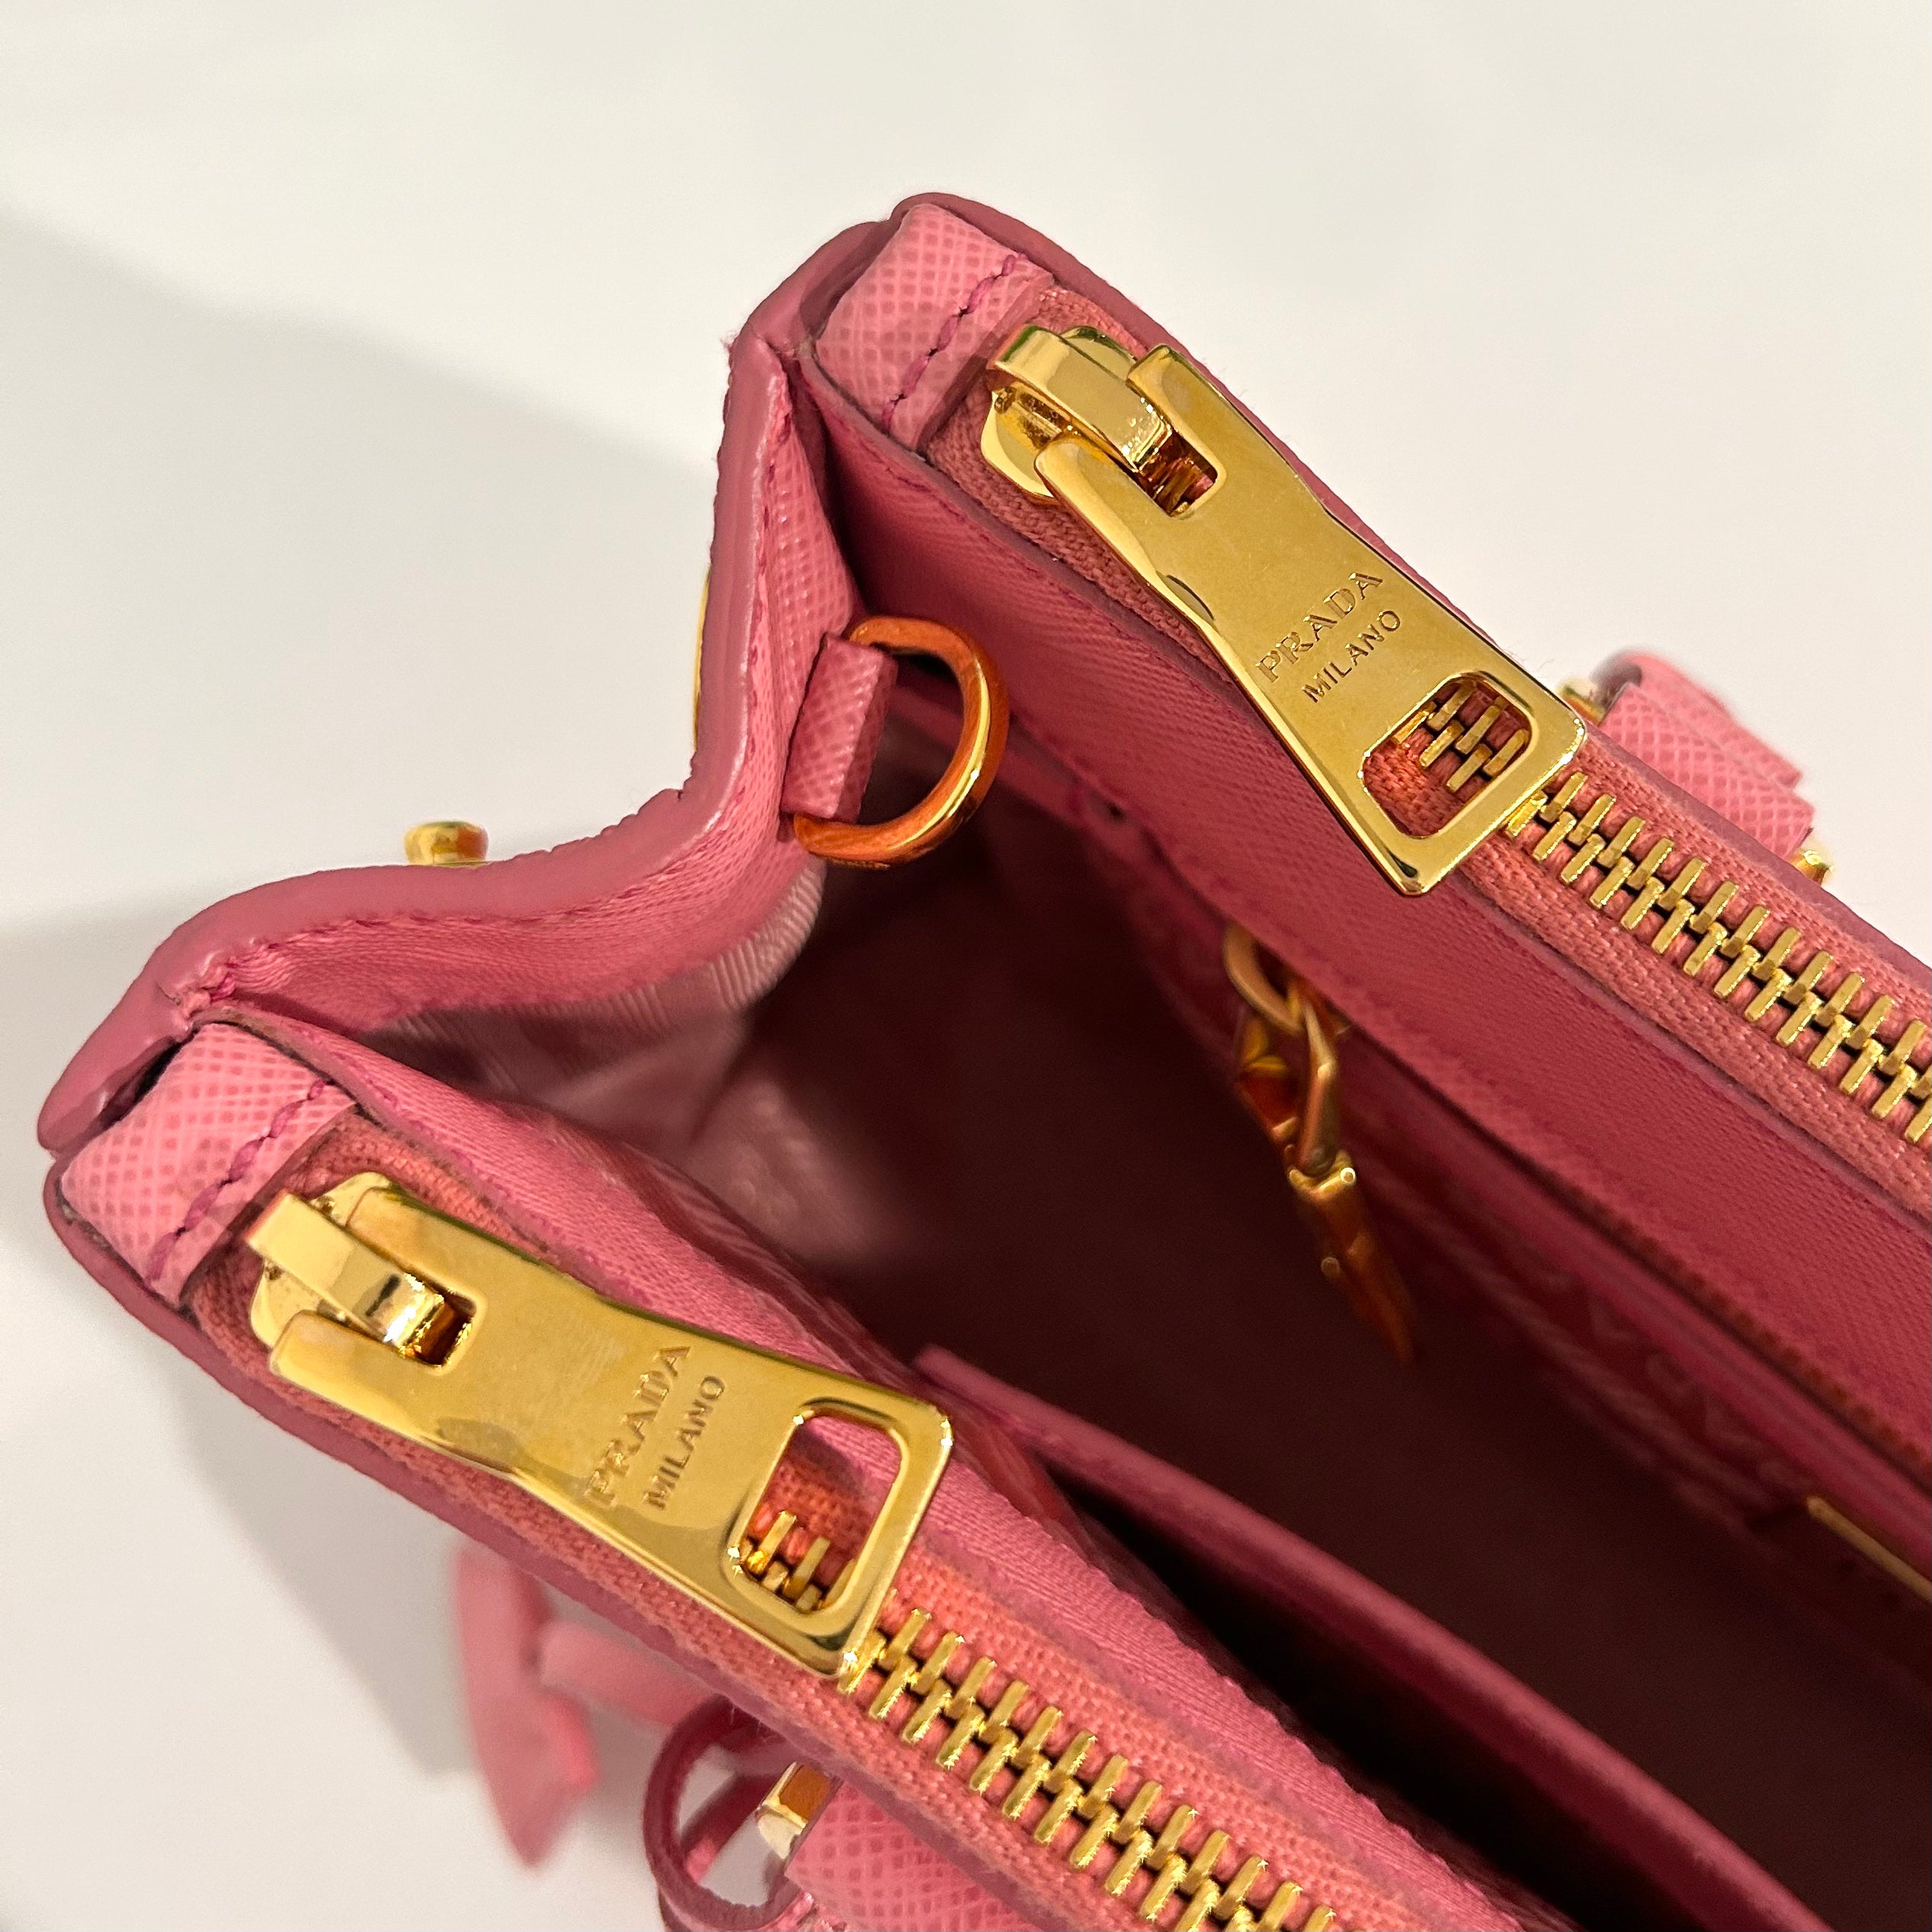 Prada Pink Galleria Saffiano Leather Bag